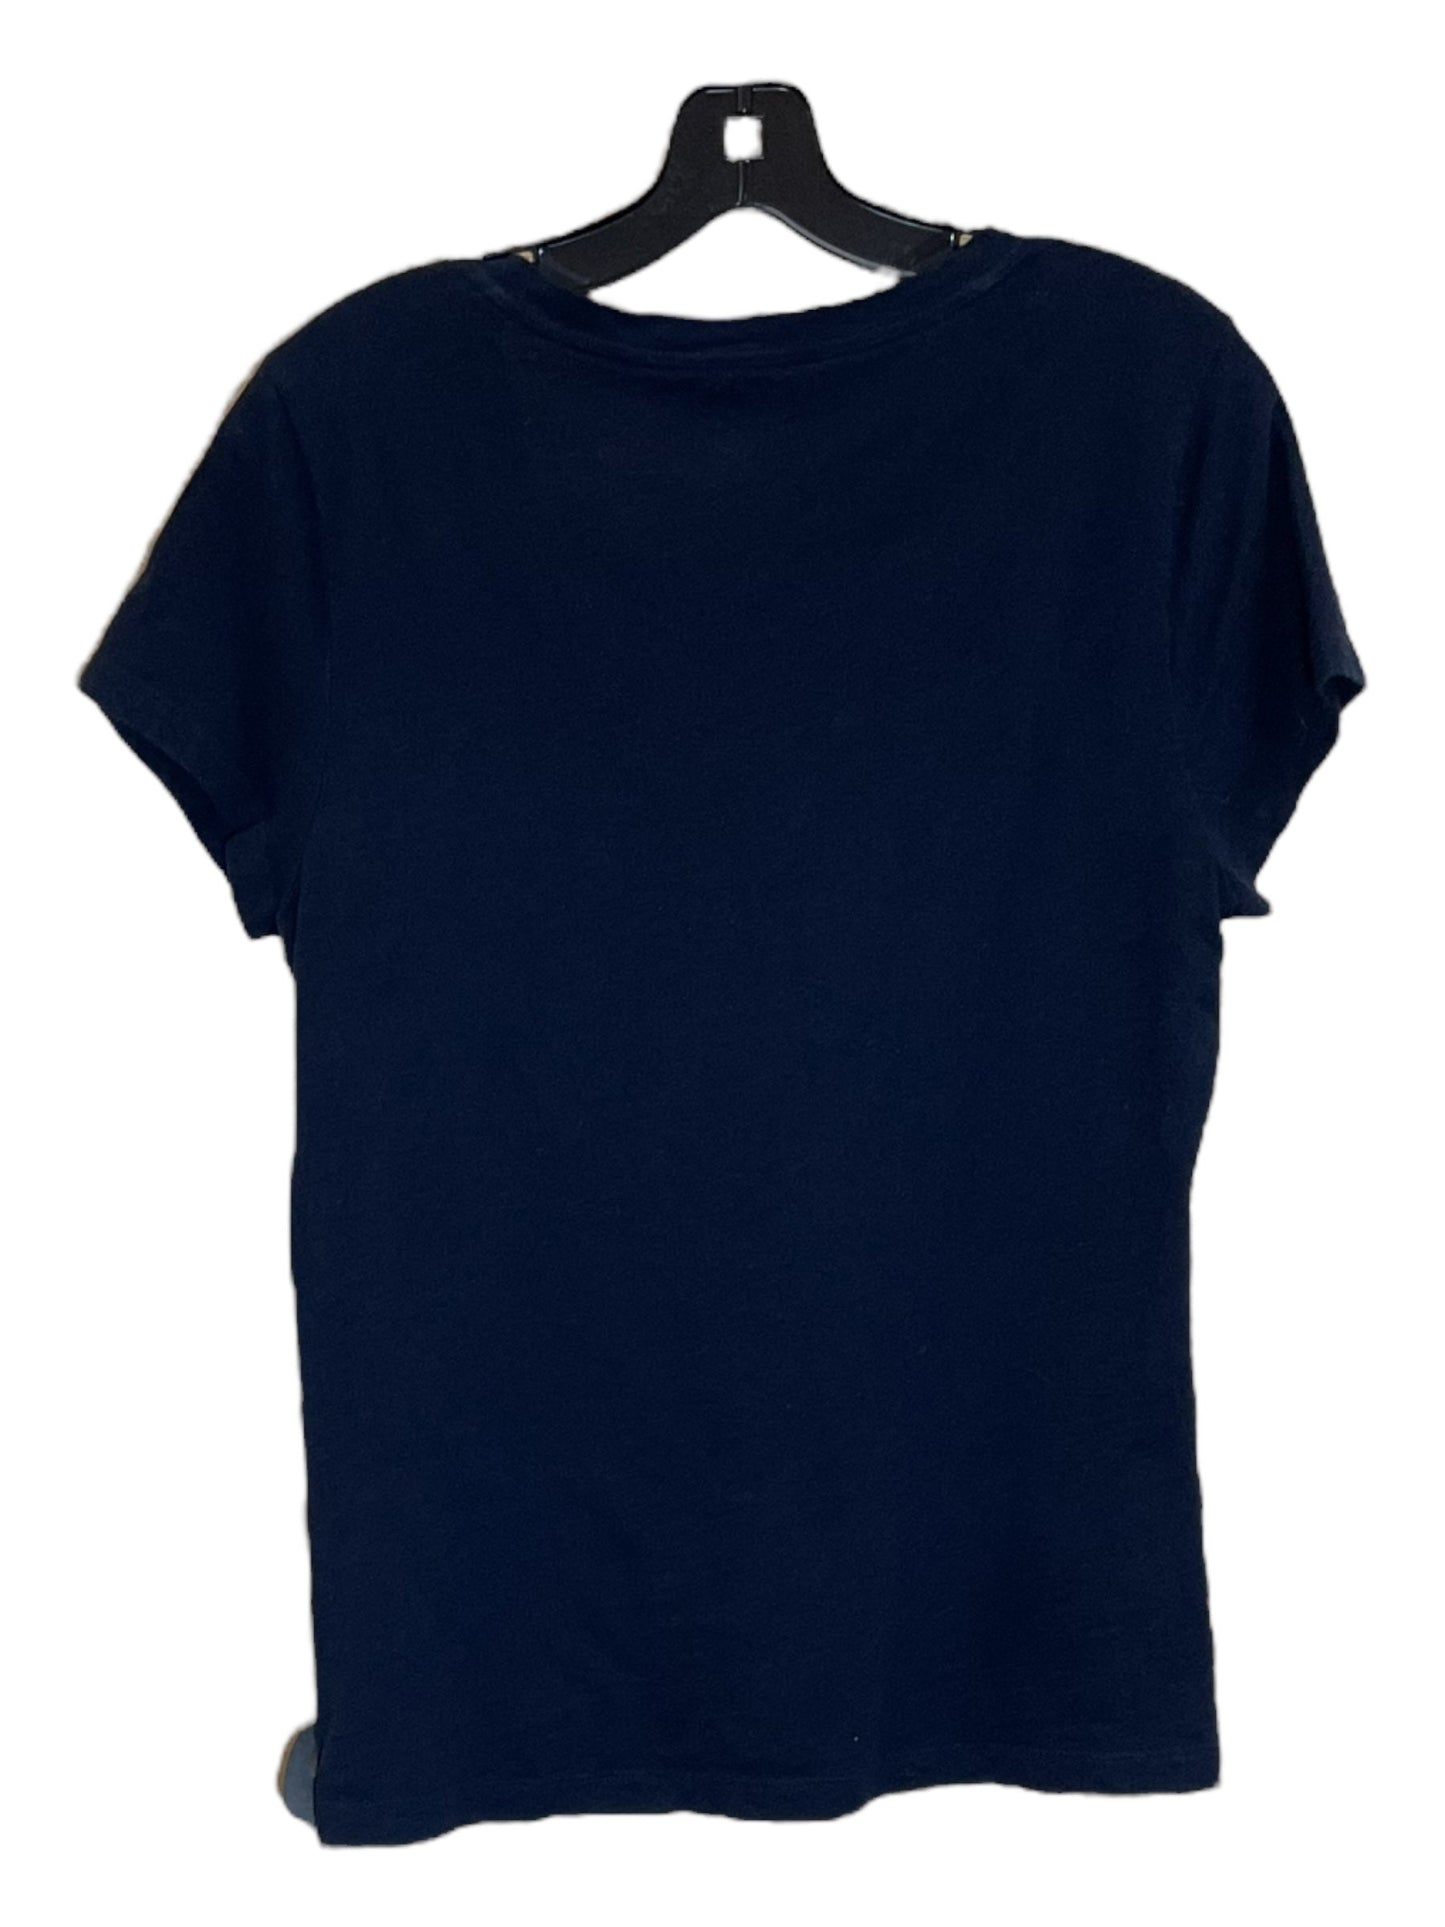 Blue Top Short Sleeve Tommy Hilfiger, Size L